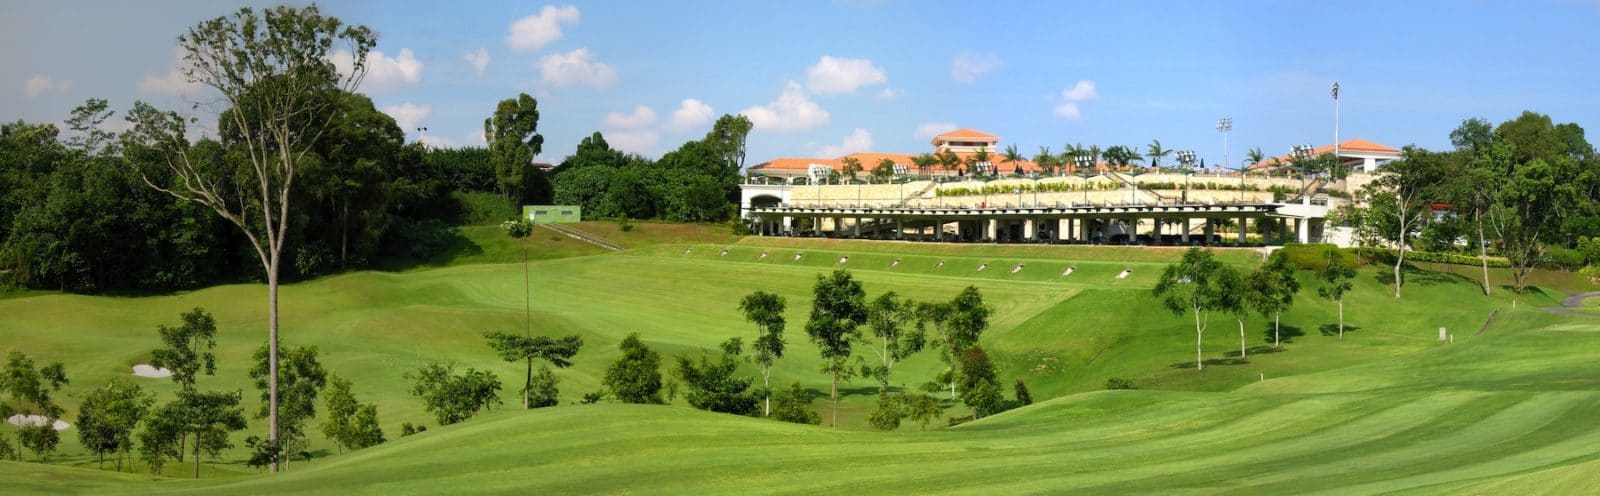 Golf Club Singapore Island Country